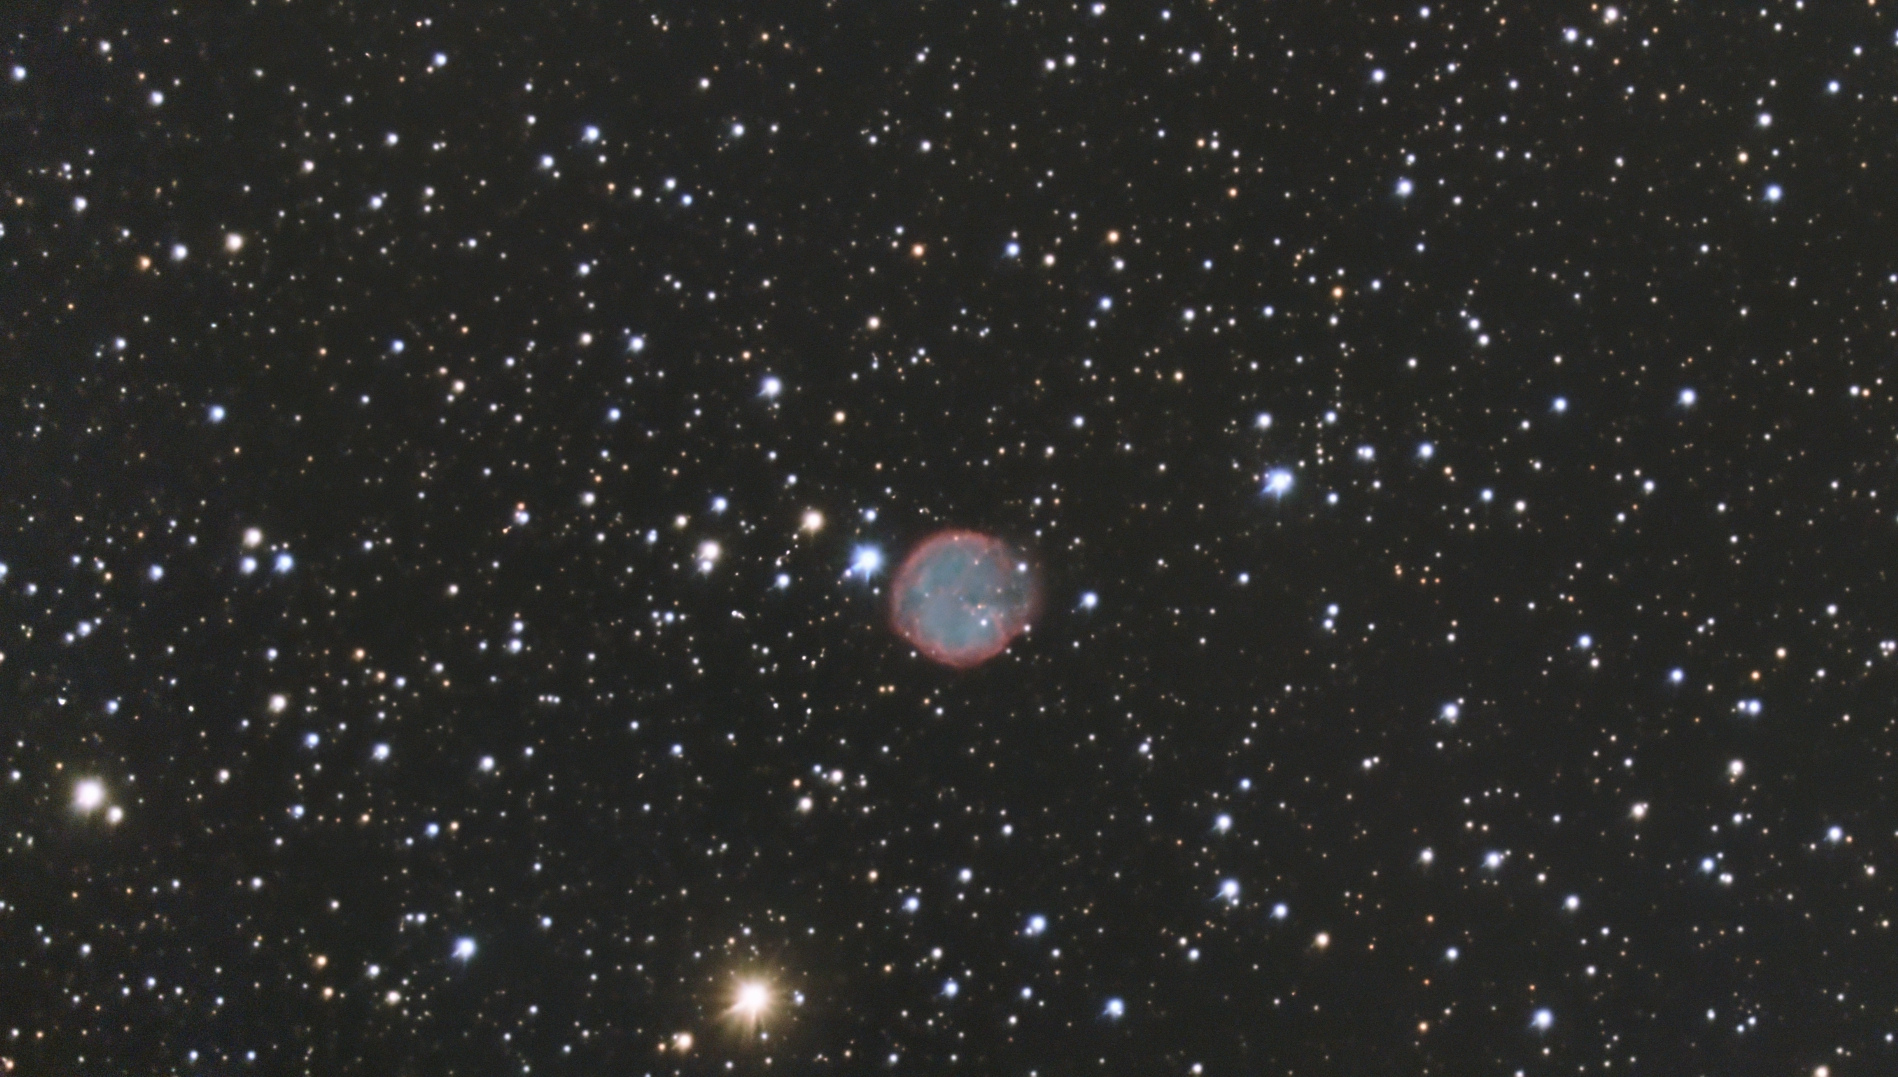 650d313e2672e_NGC7048-Meade-neptune464_RGB-Siril-Pix-PS-finale.jpg.68b6d169b79f8cadf88b06f521fdae58.jpg